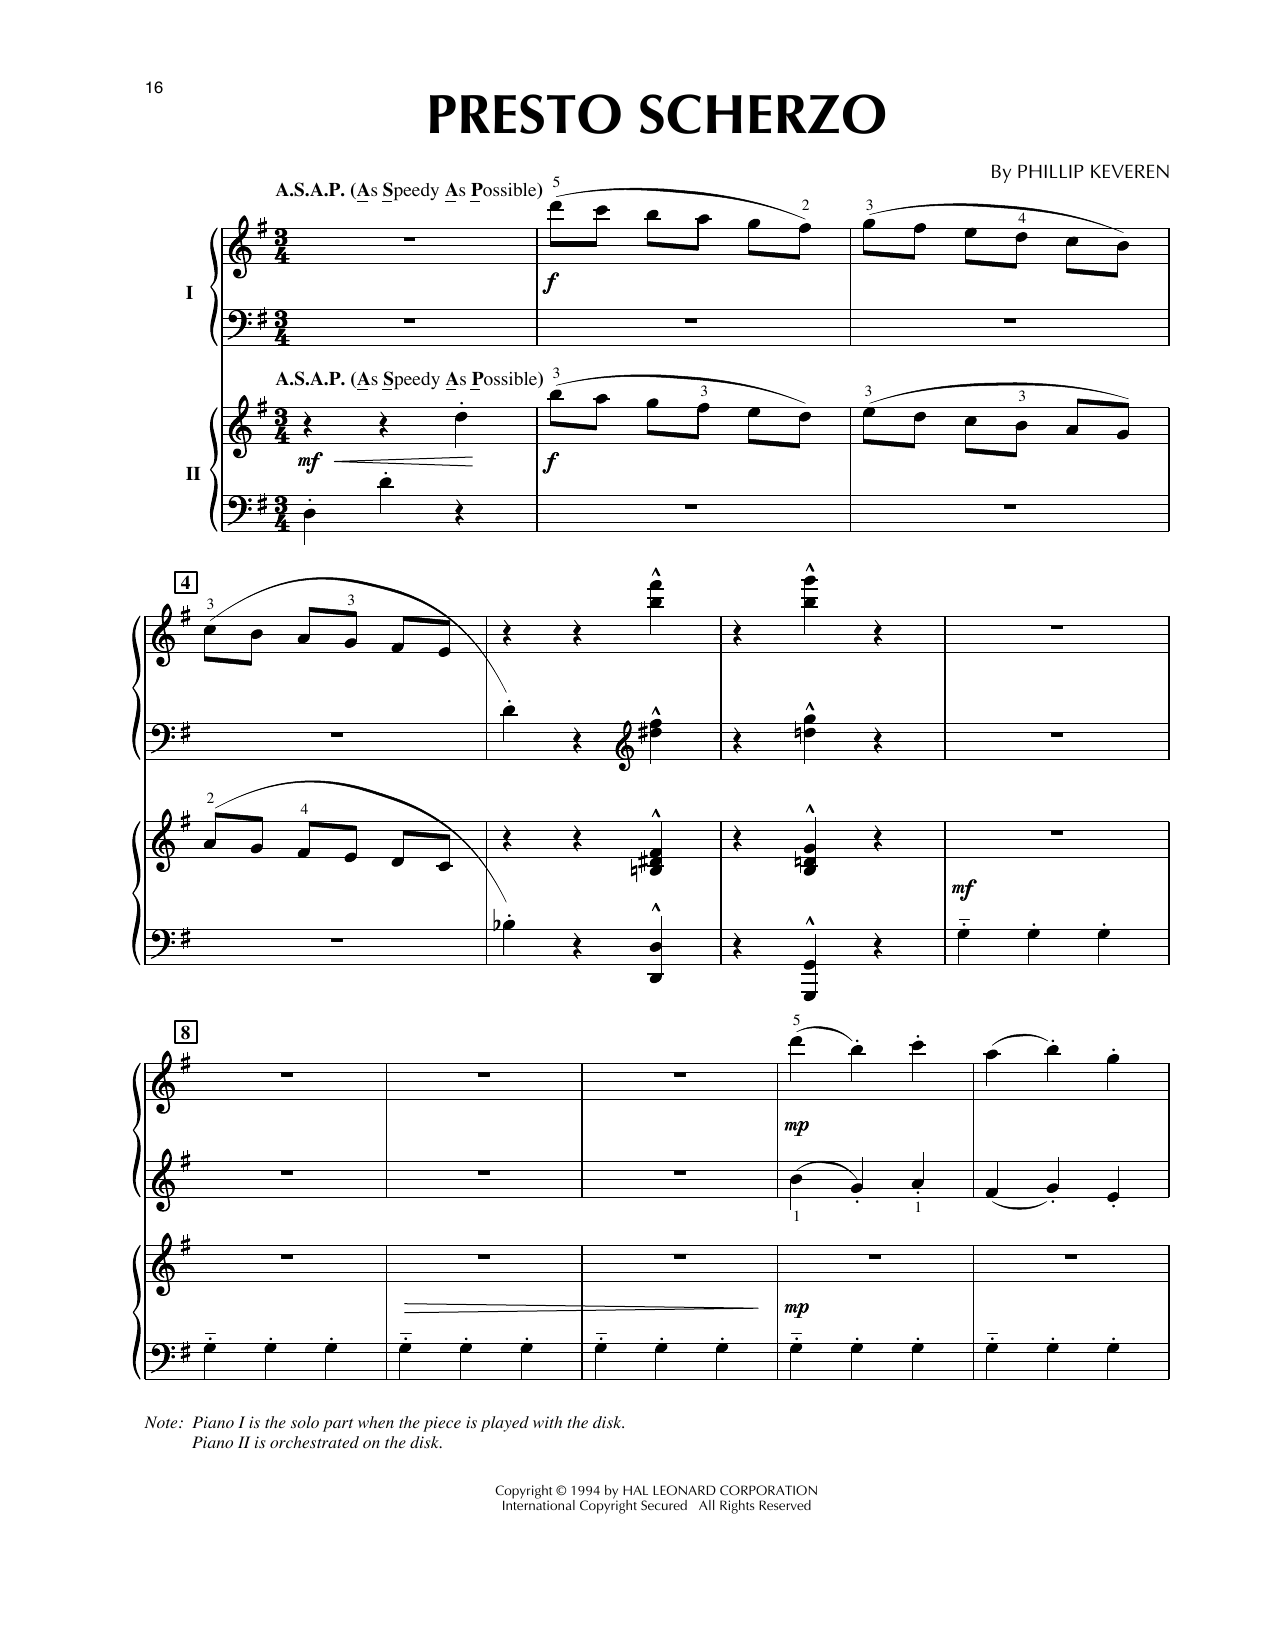 Download Phillip Keveren Presto Scherzo (from Presto Scherzo) (for 2 pianos) Sheet Music and learn how to play Piano Duet PDF digital score in minutes